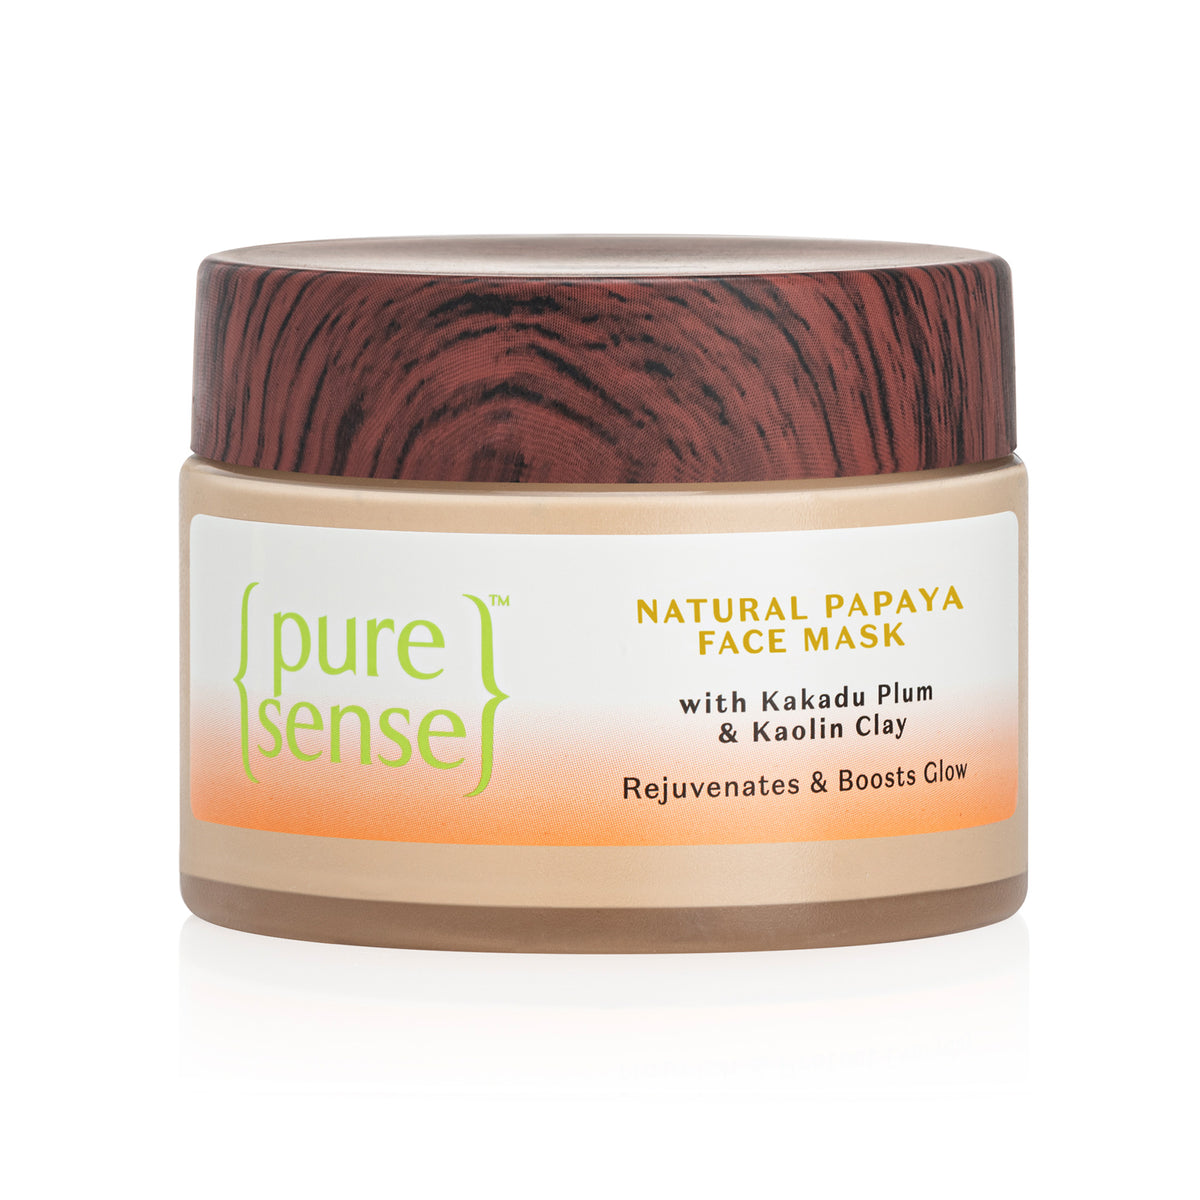 Natural Papaya Face Mask | From the makers of Parachute Advansed | 65g - PureSense